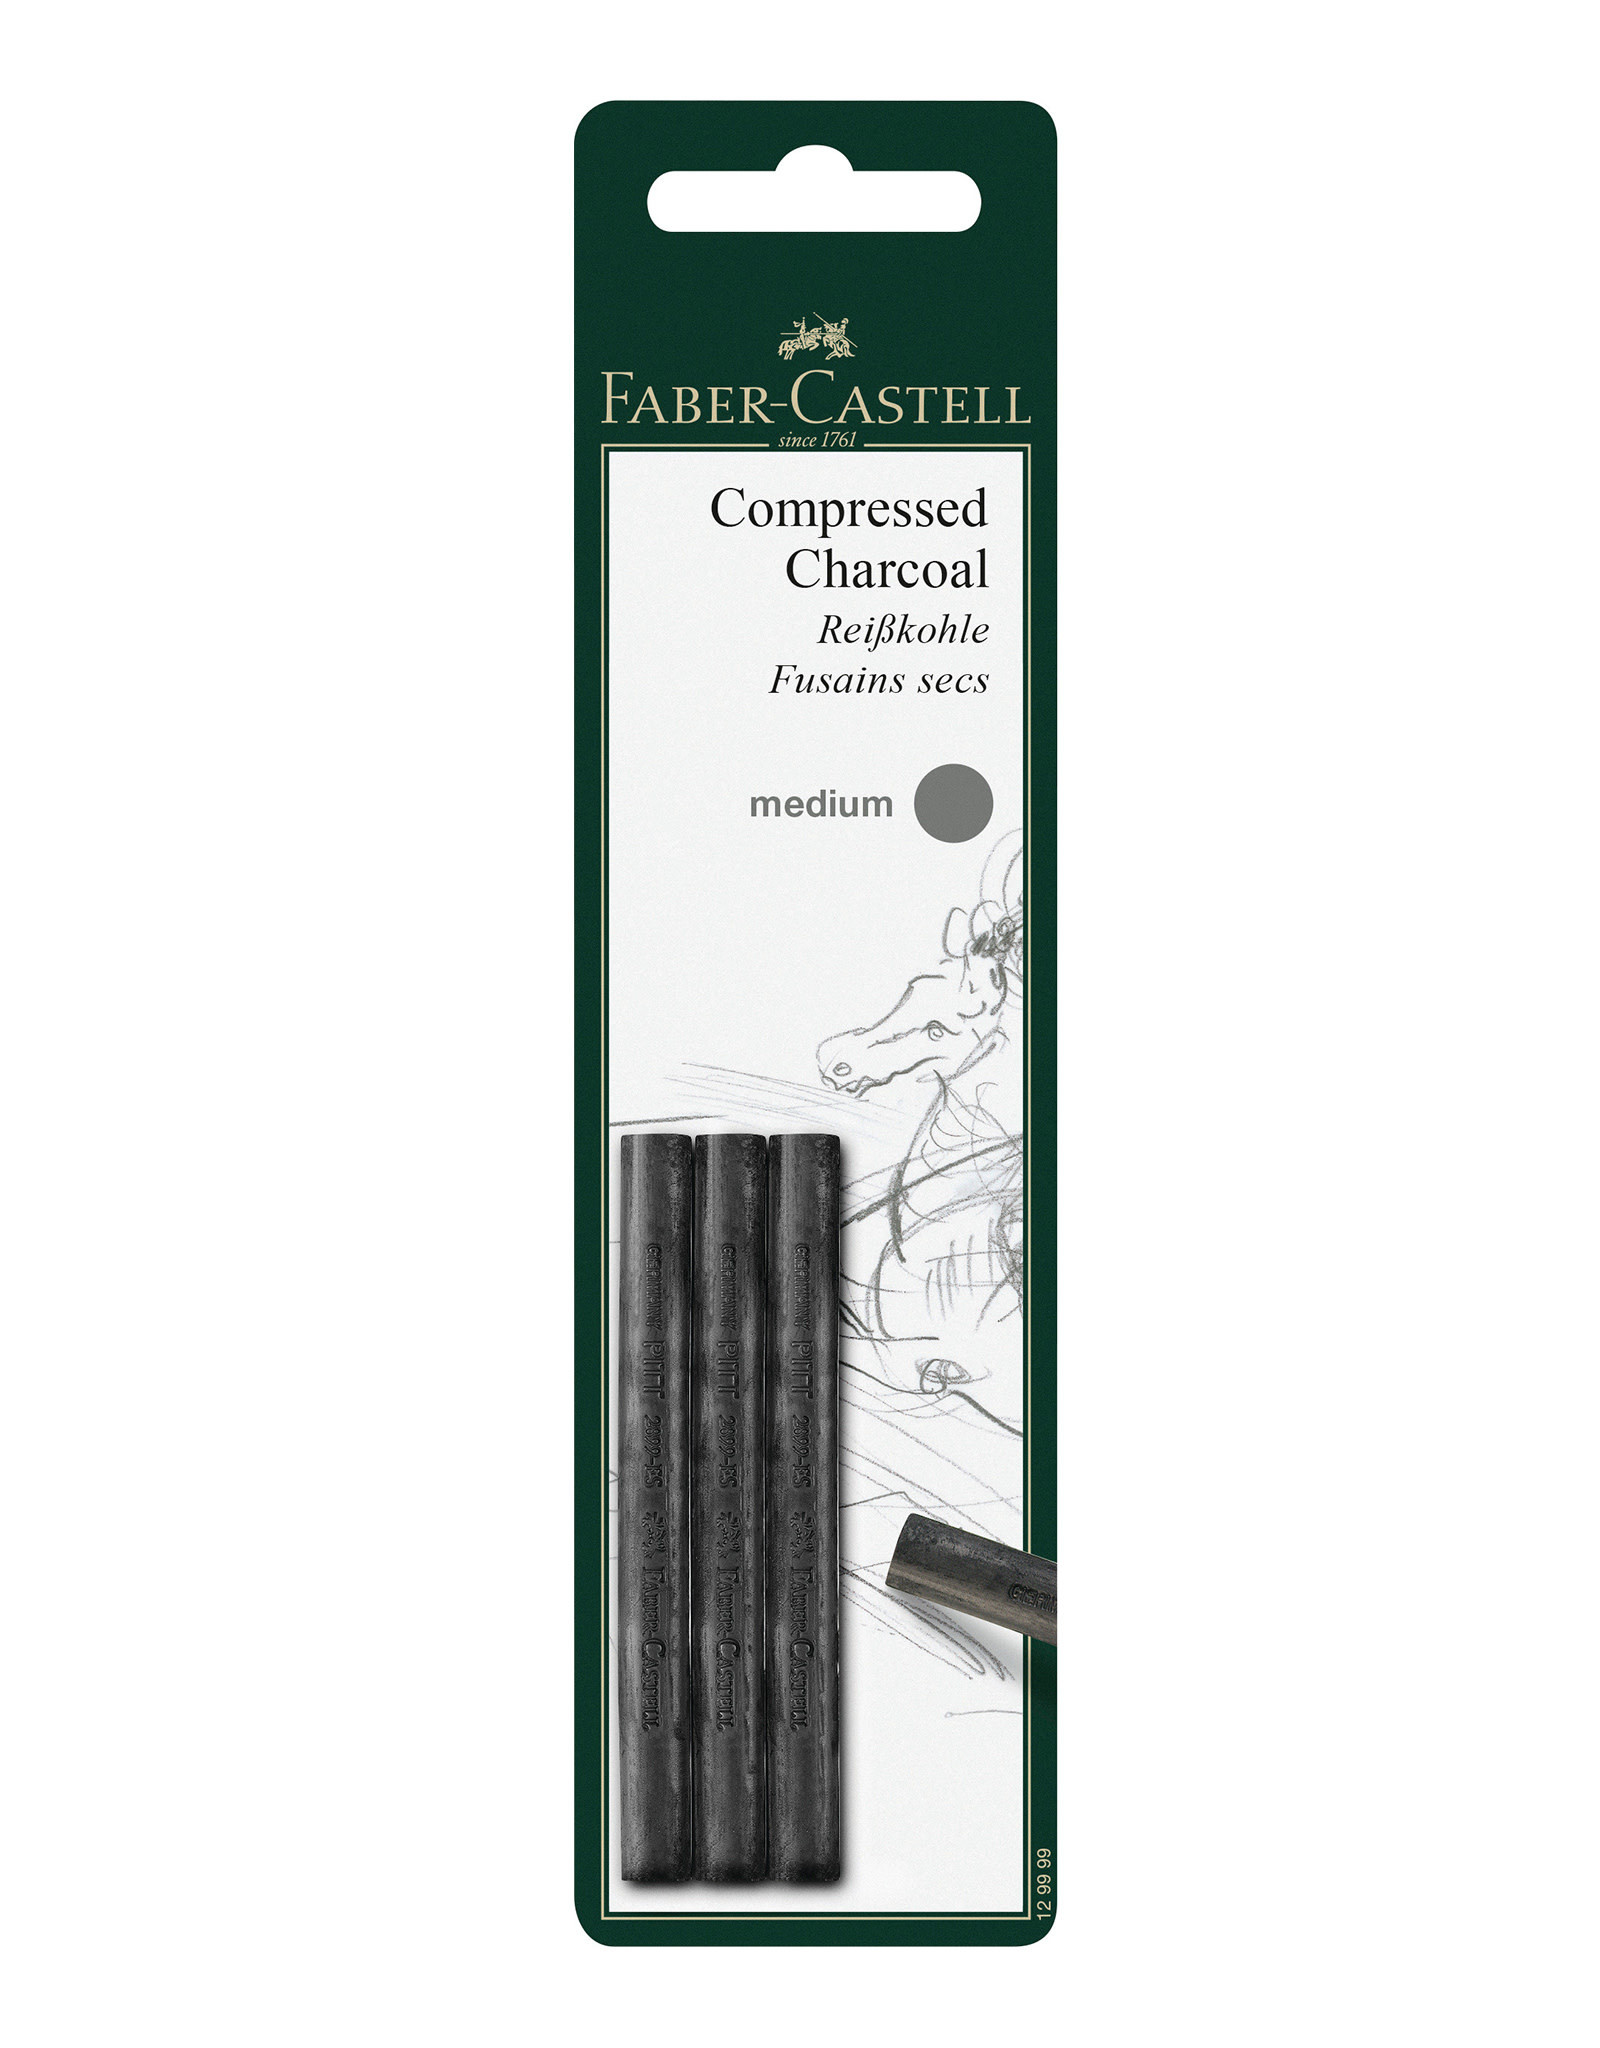 FABER-CASTELL Faber-Castel Pitt Compressed Charcoal Sticks Set of 3 – Medium